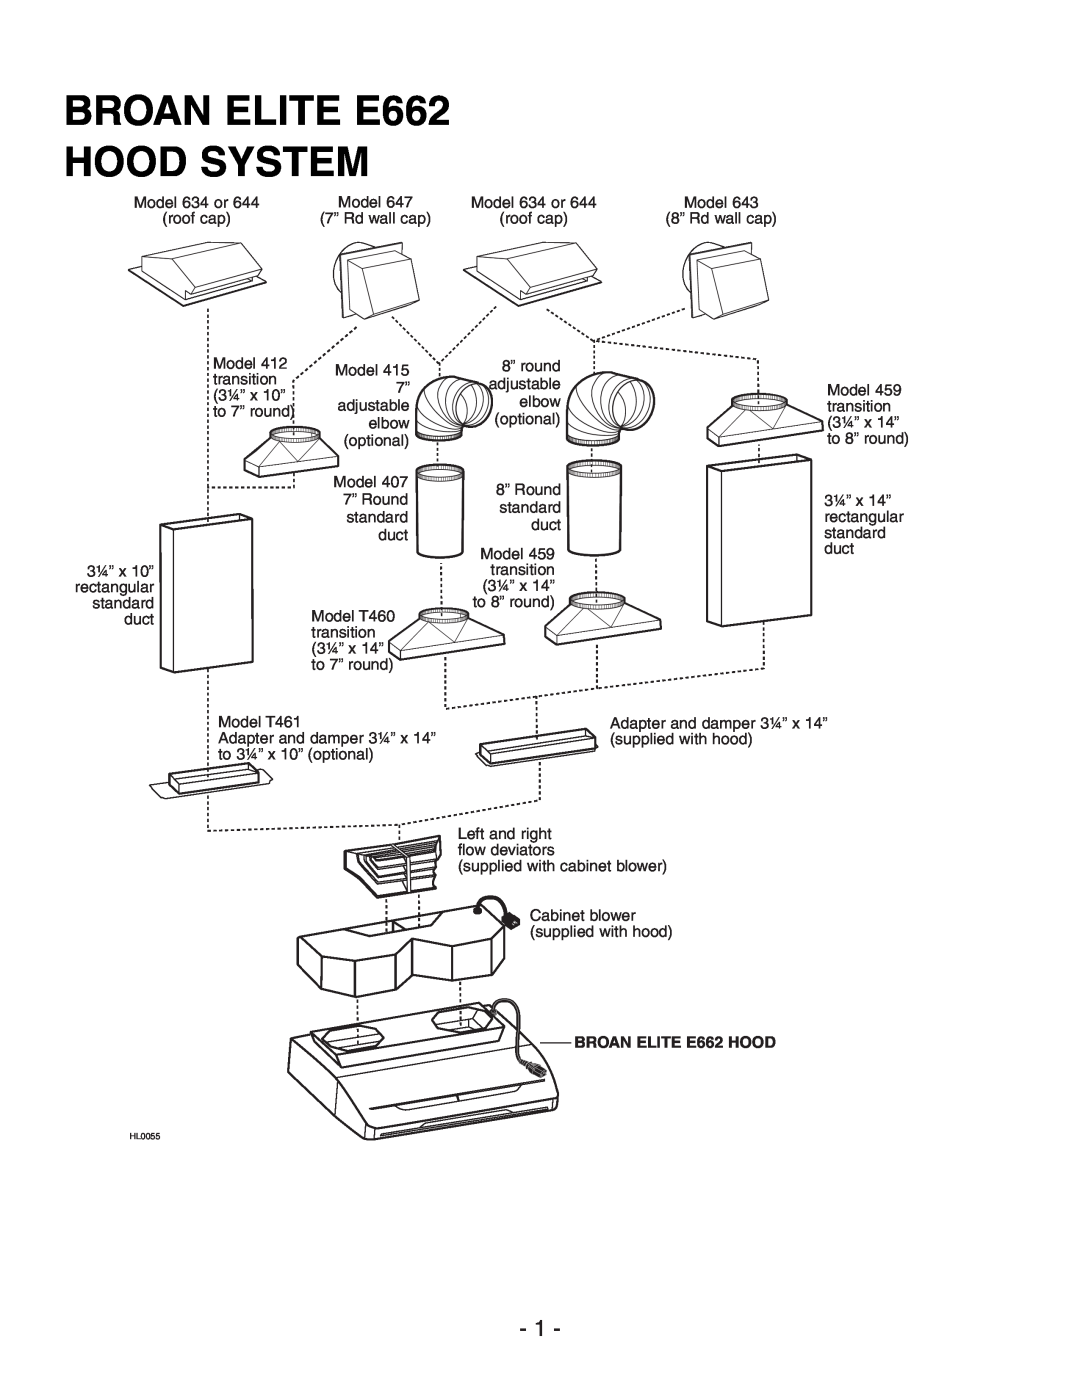 Broan Model E662 installation instructions BROAN ELITE E662 HOOD SYSTEM 